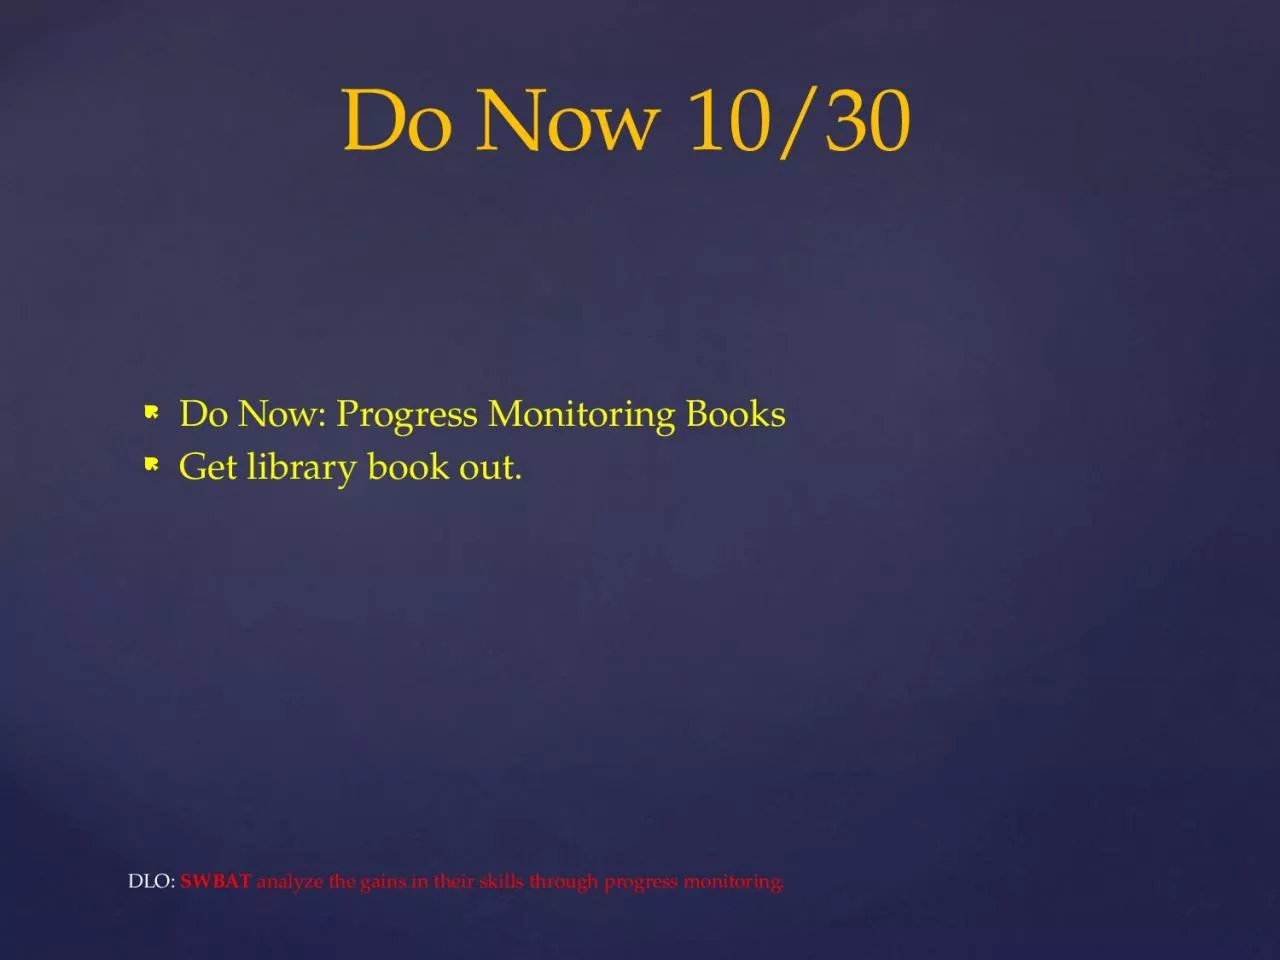 Do Now: Progress Monitoring Books